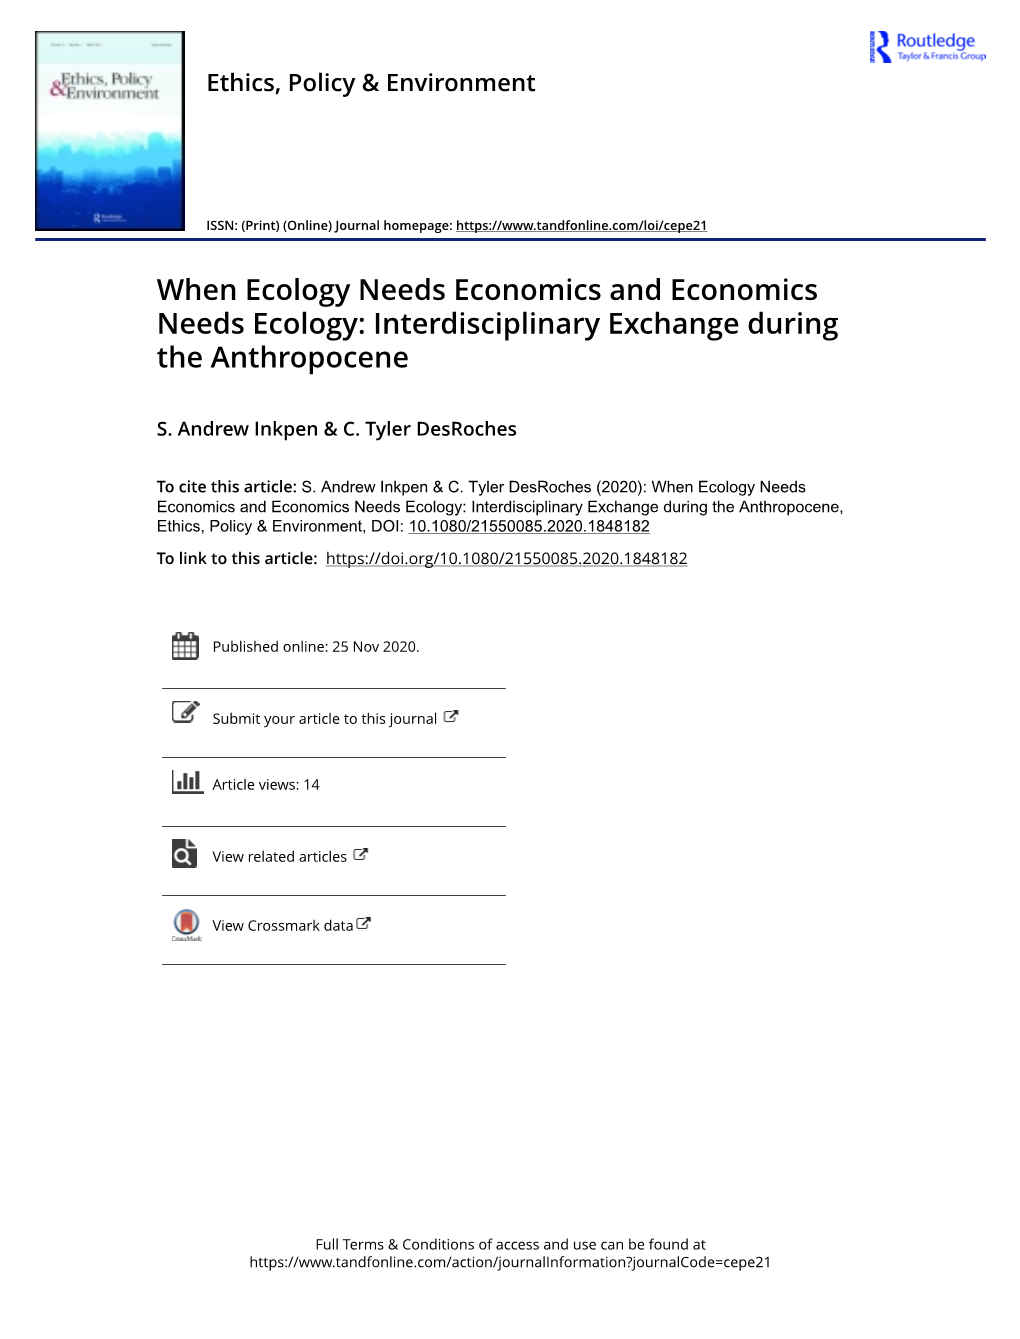 When Ecology Needs Economics and Economics Needs Ecology: Interdisciplinary Exchange During the Anthropocene